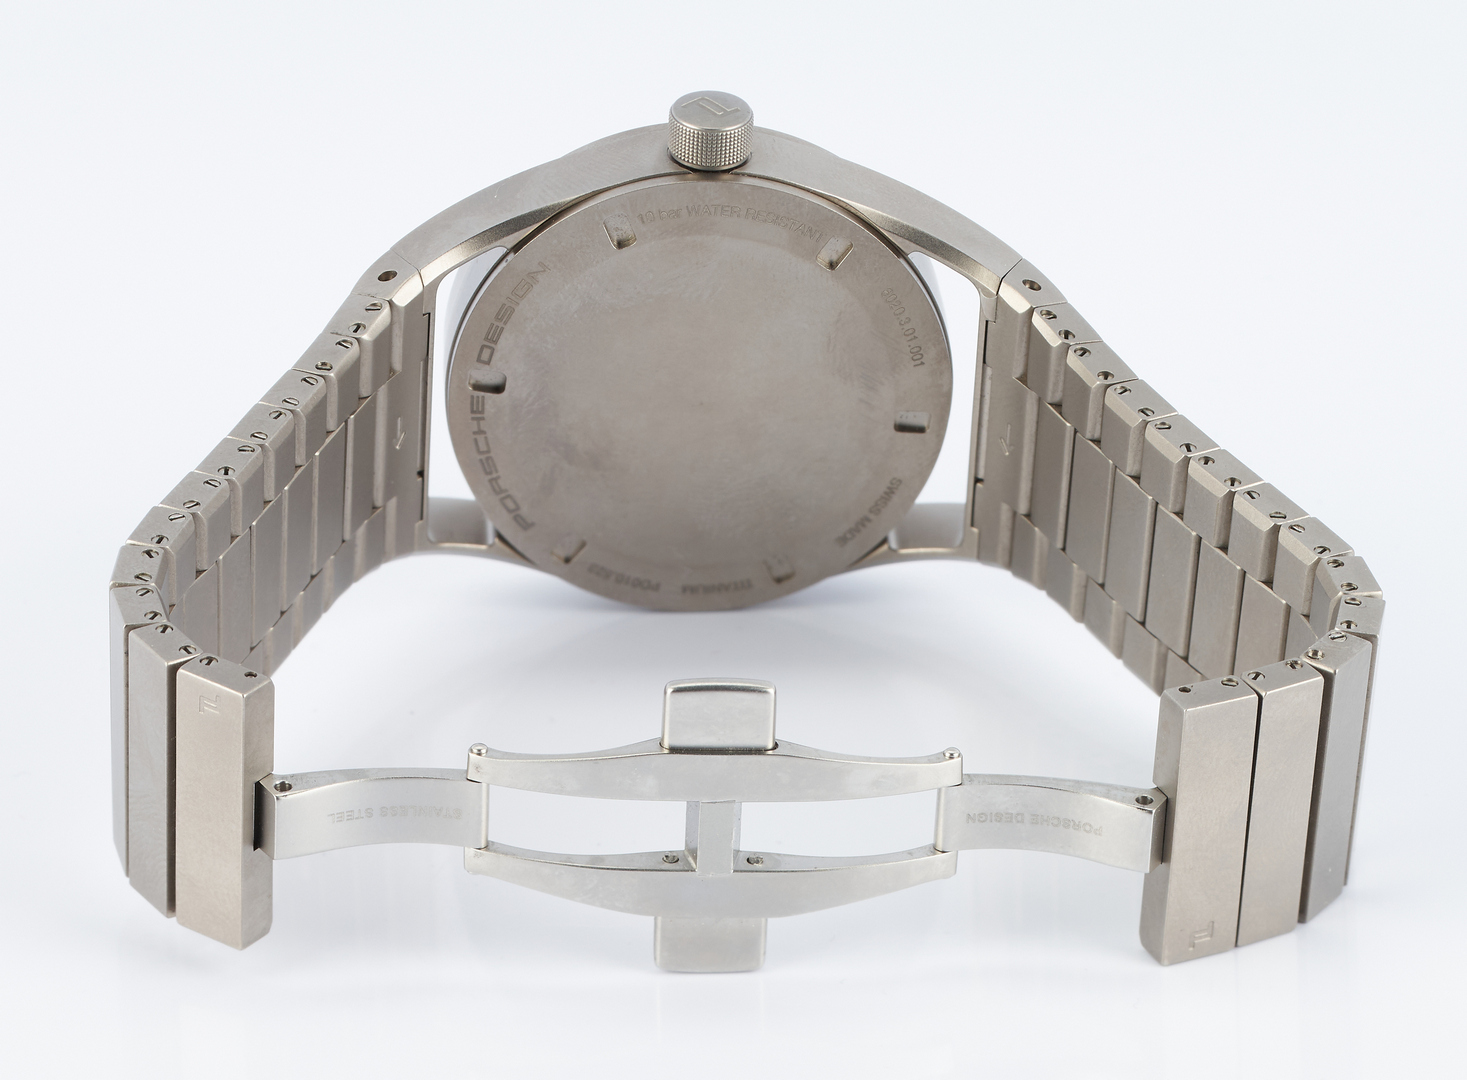 Lot 264: Porsche Design 1919 Datetimer Wrist Watch